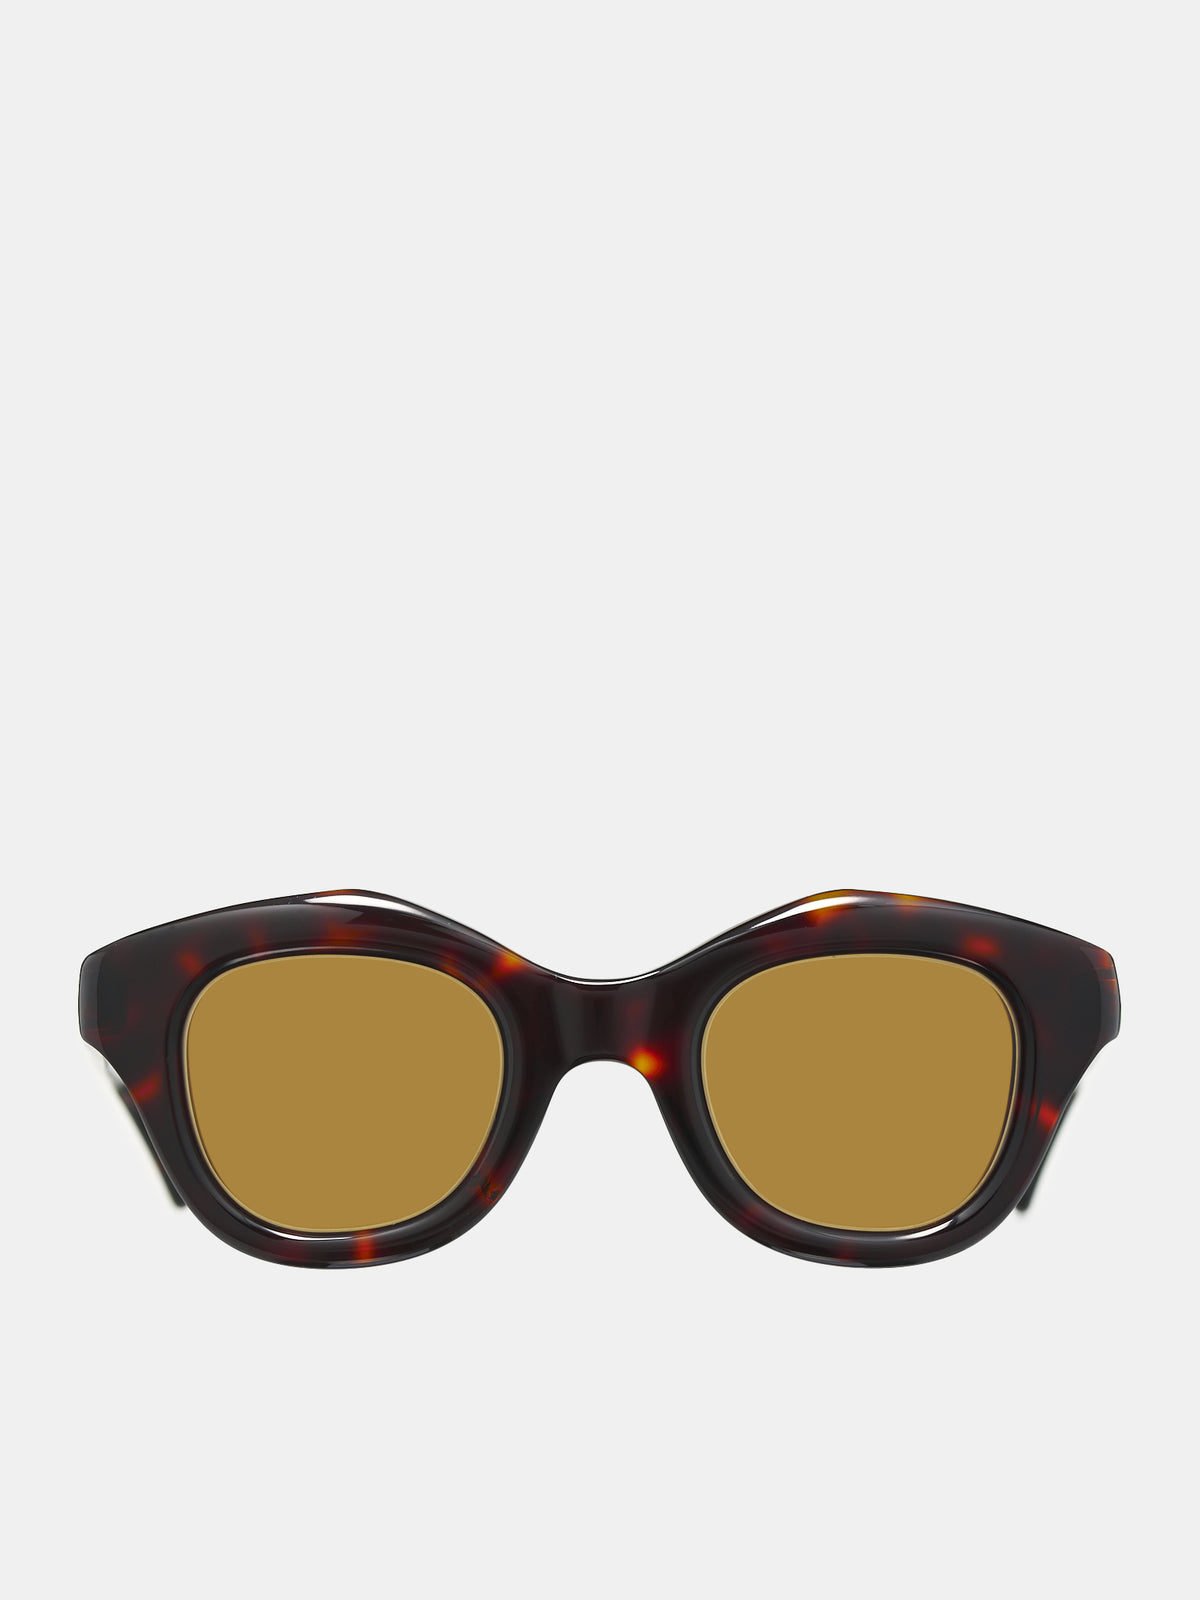 Hook Sunglasses (HOOK-TORTSHELL-AMBER4)